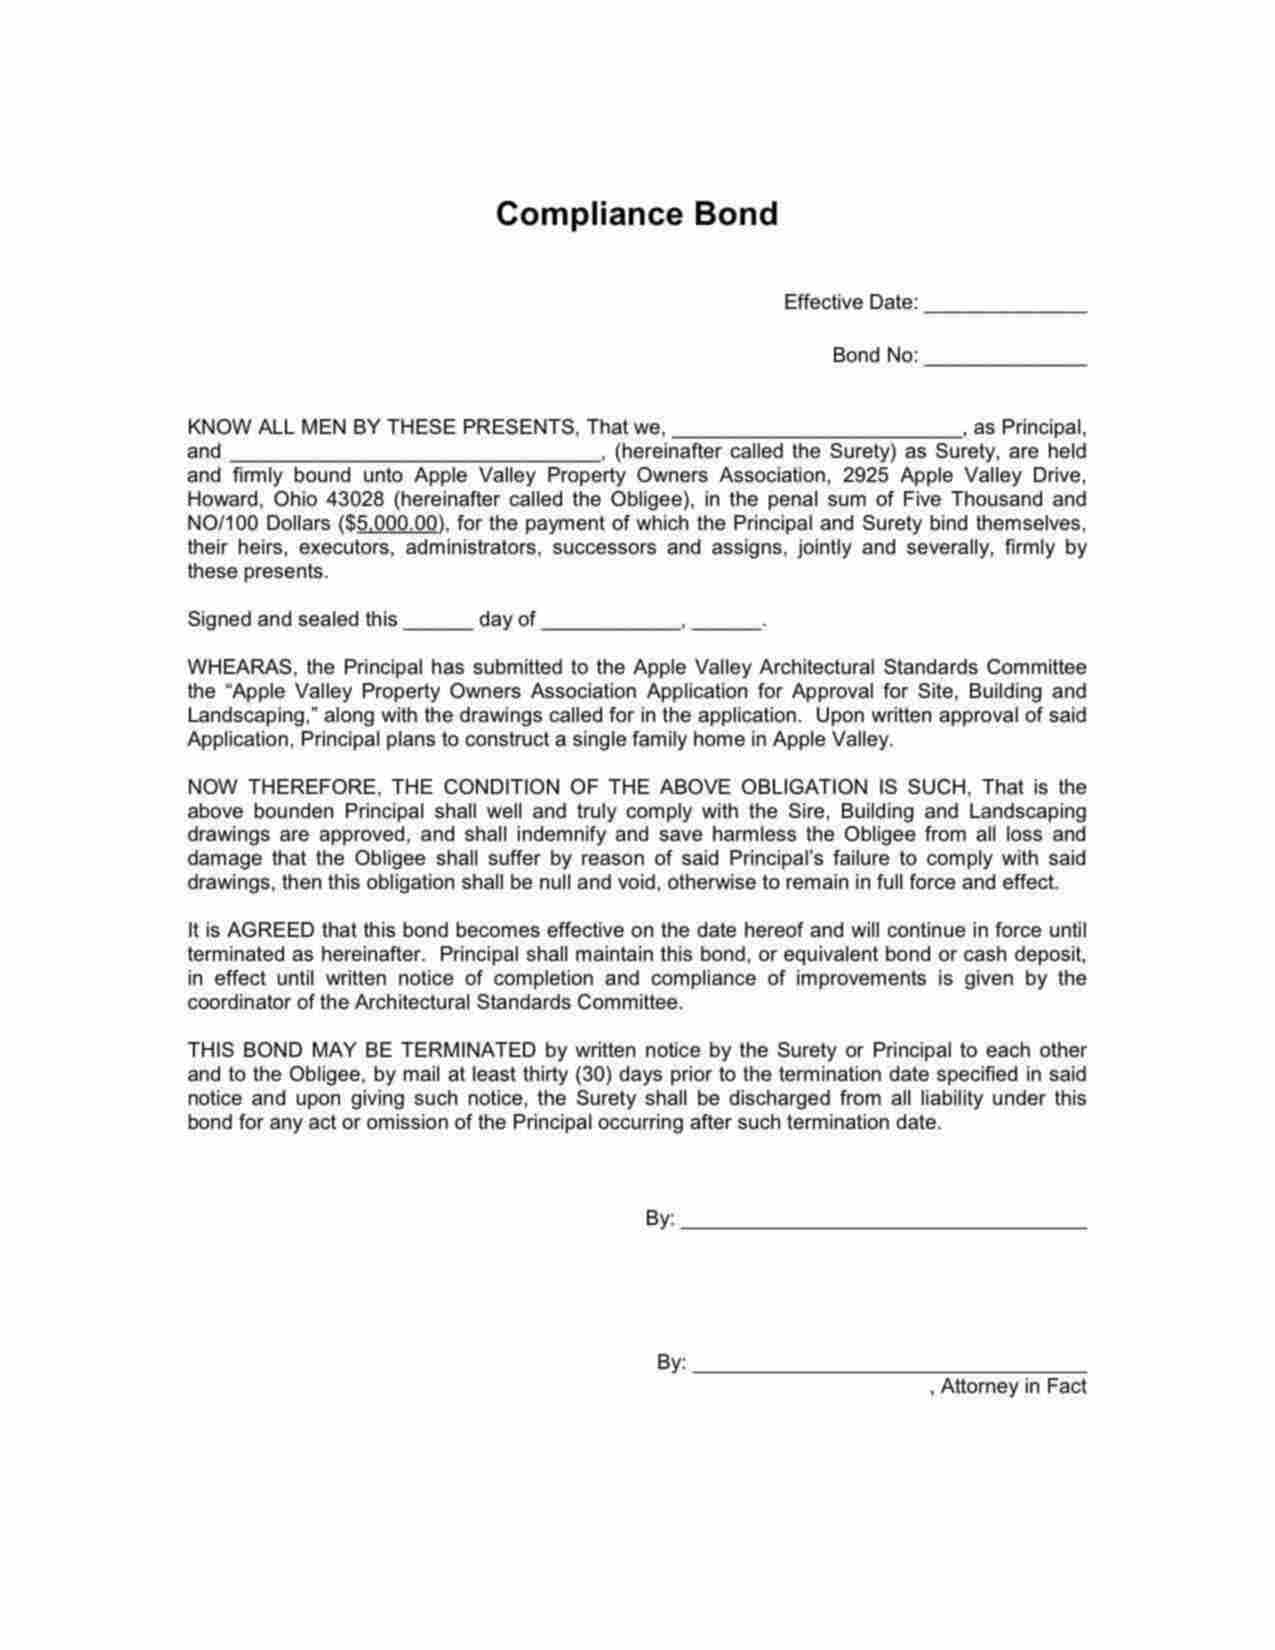 Ohio Compliance Bond Form